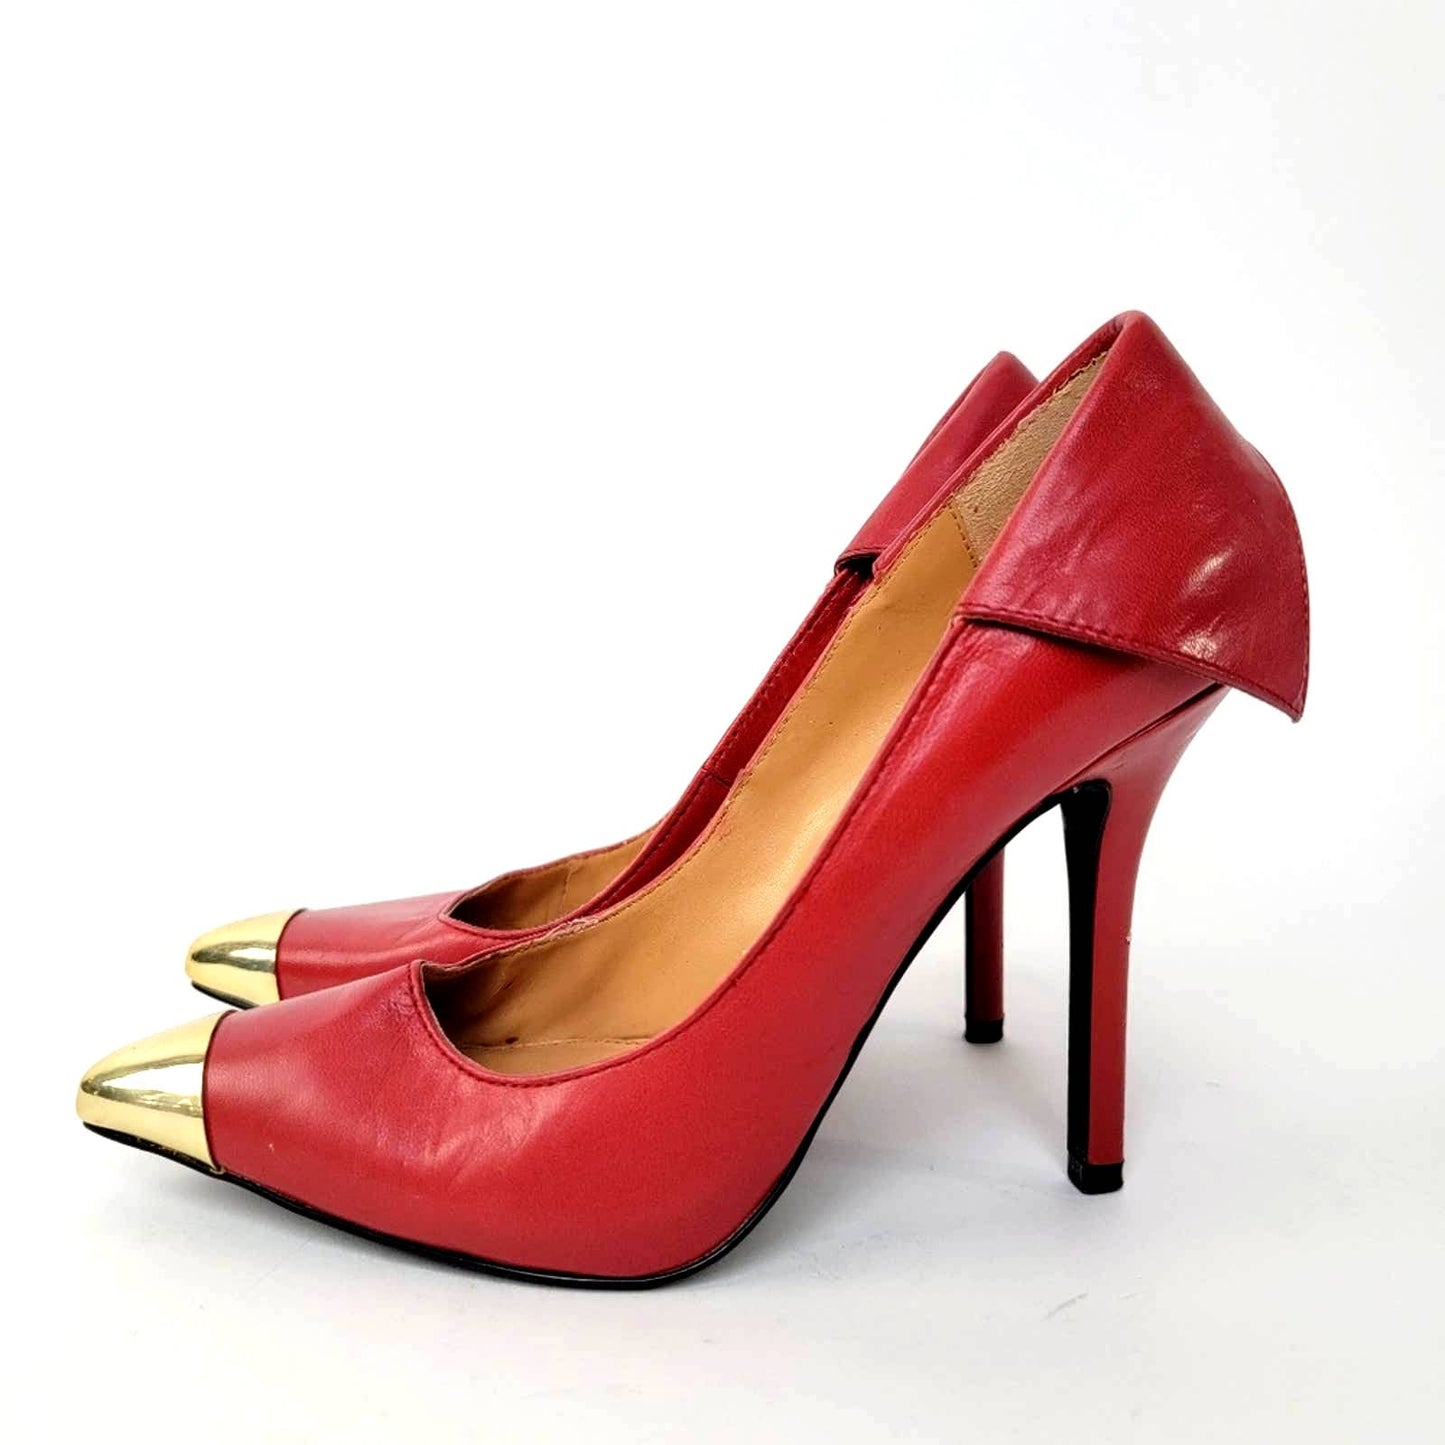 Fergie Podium Red Stiletto Pump Heels with Gold Cap Toe - 8